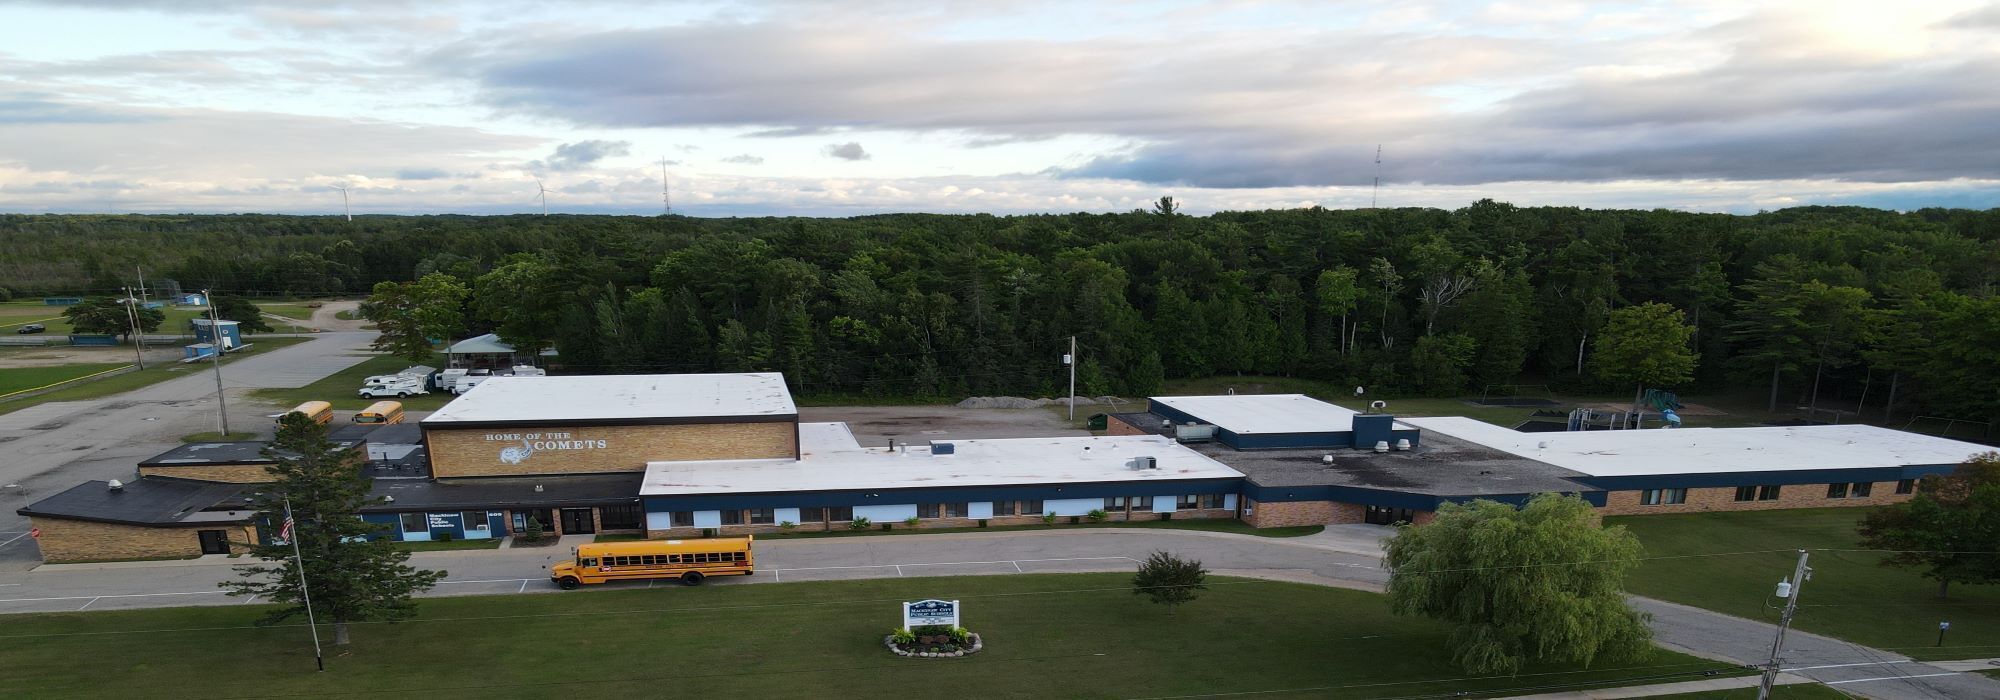 Aerial image of school